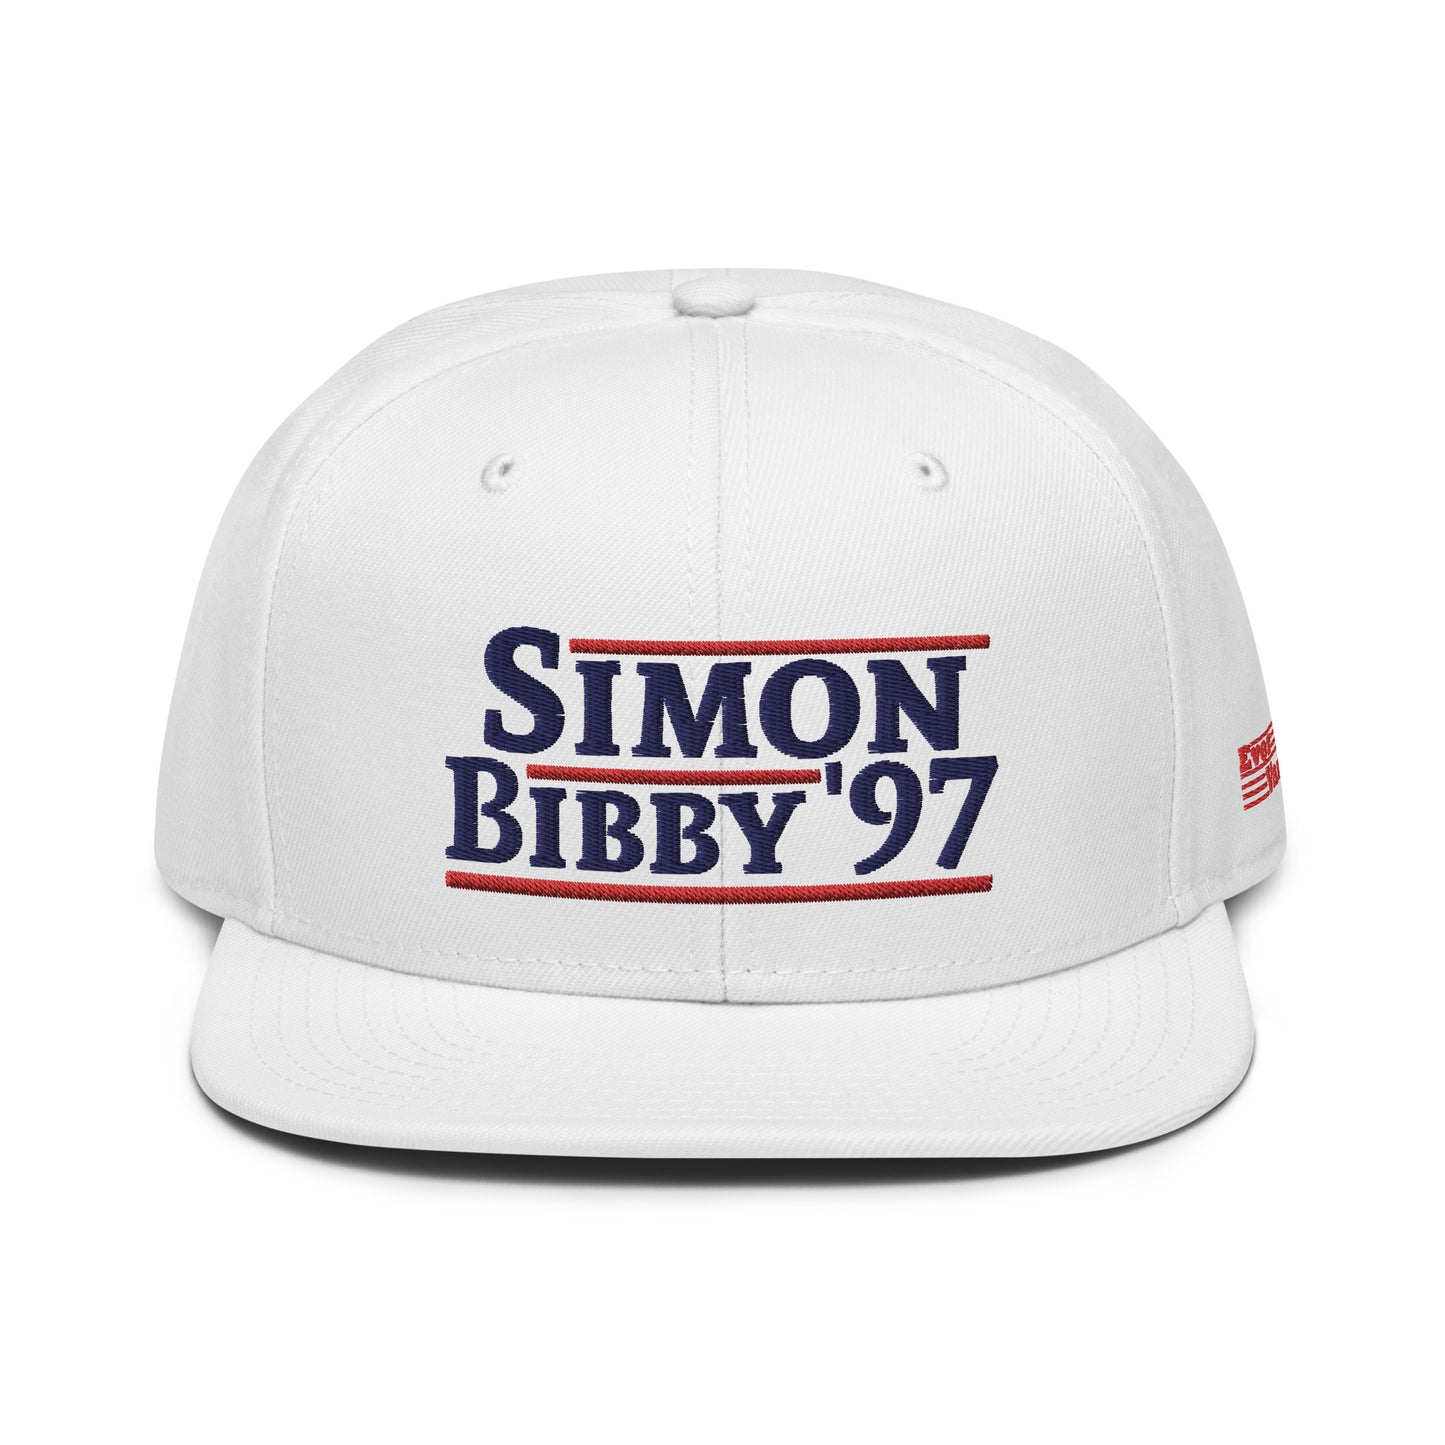 Simon/Bibby '97 - Snapback Hat